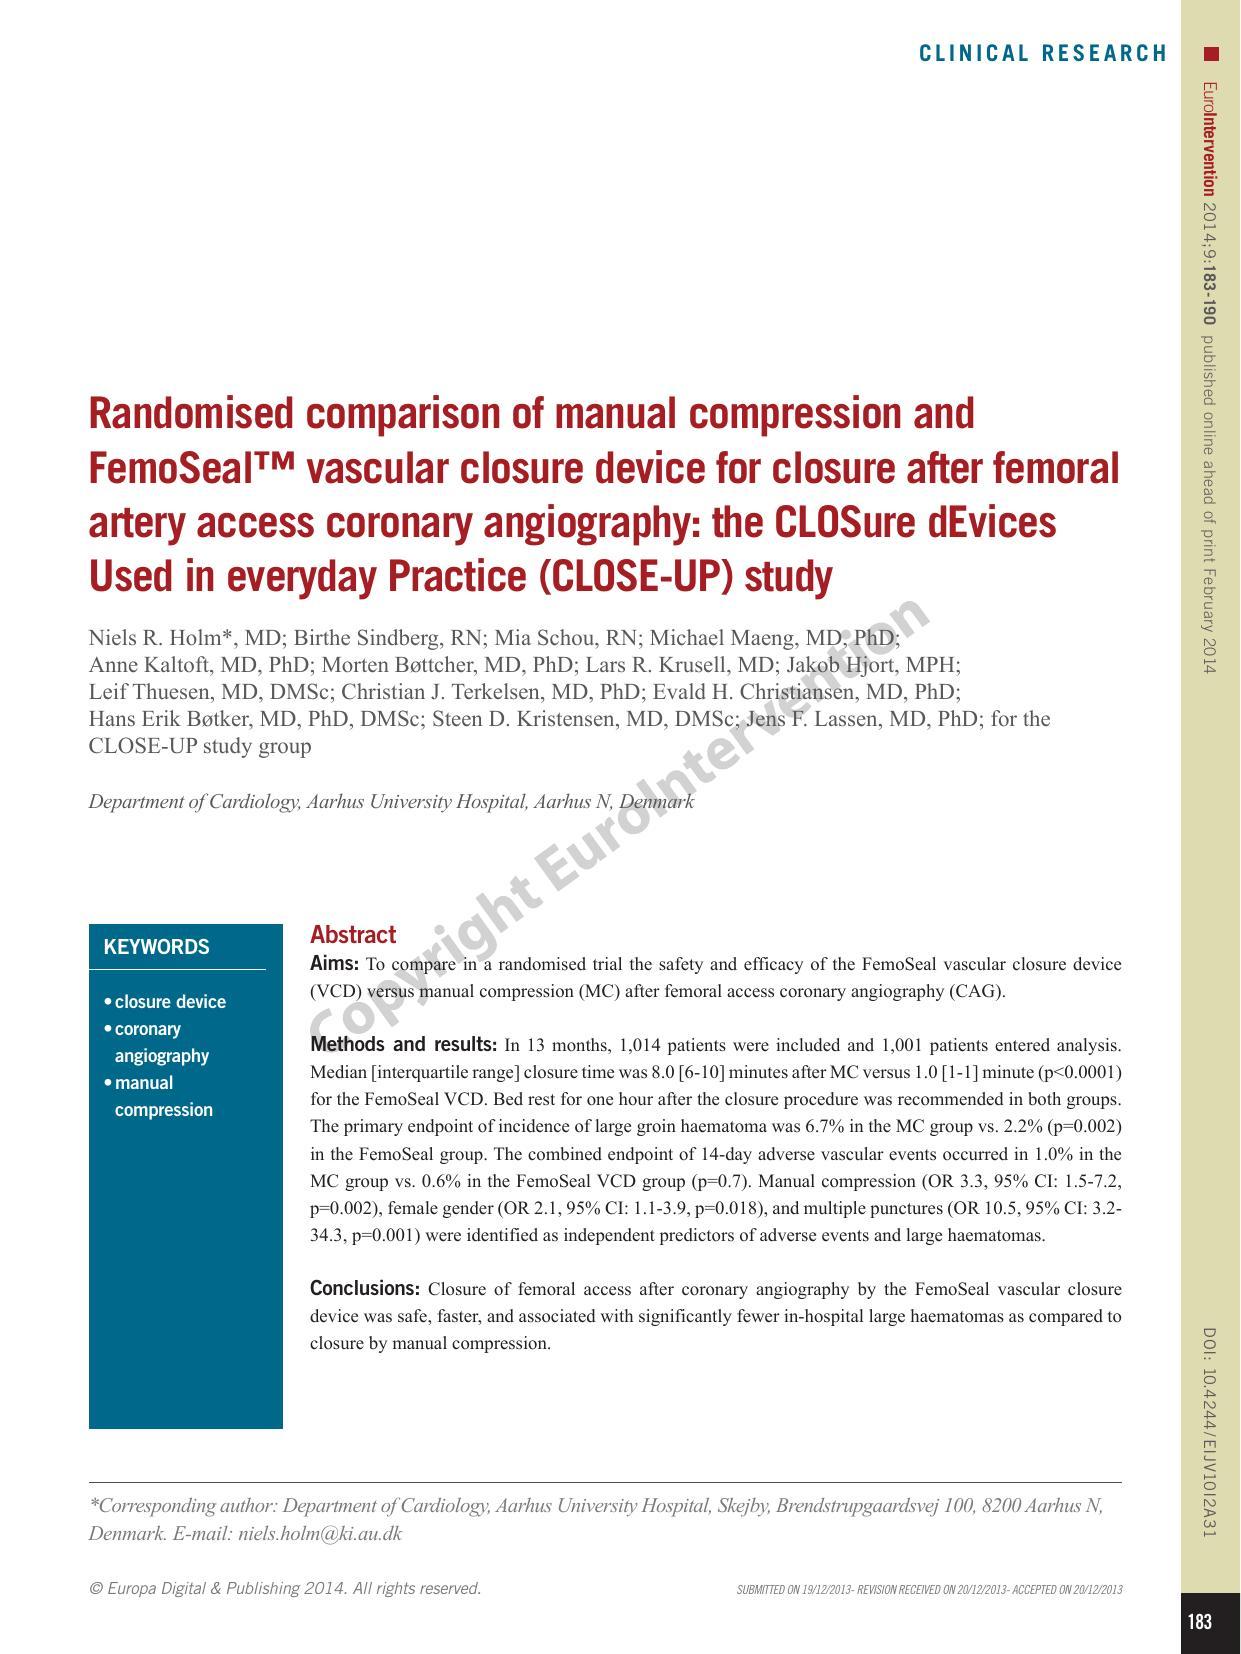 femoseal-vascular-closure-device-user-manual.pdf